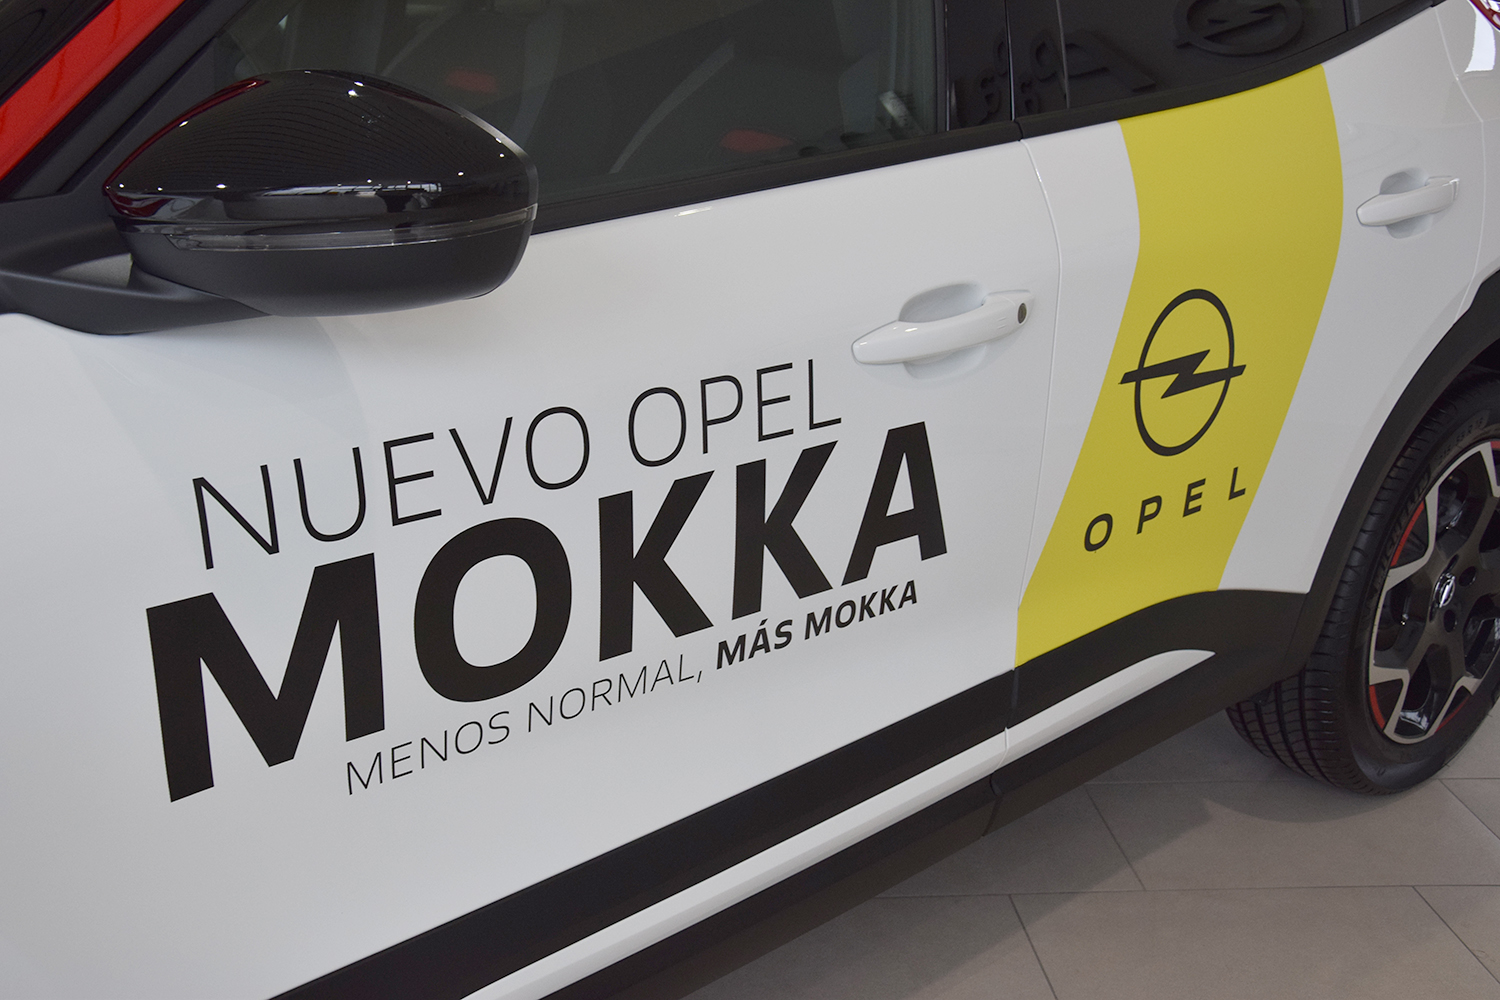 Nuevo Opel Mokka, Menos normal, Más Mokka